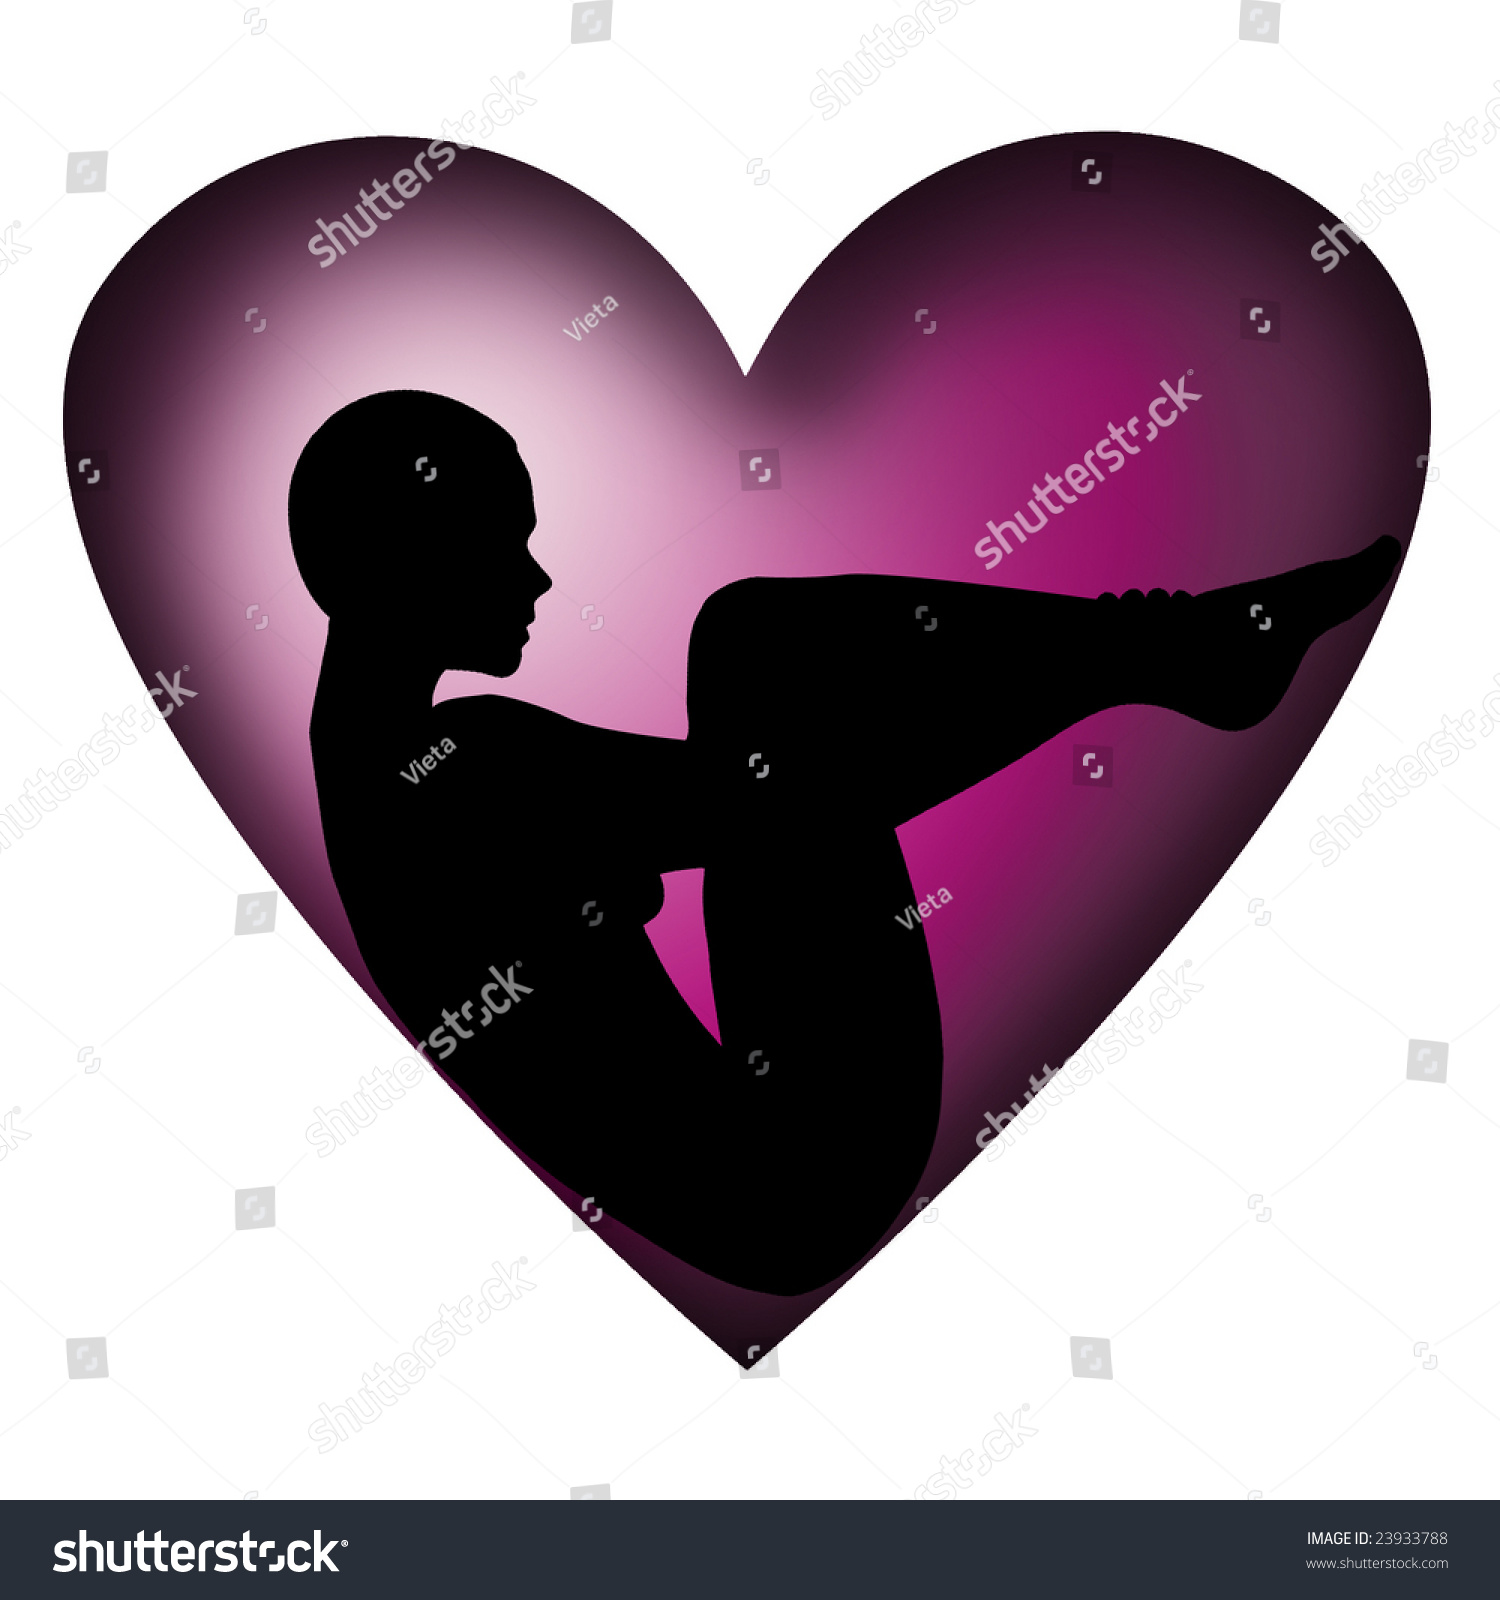 Lonely Heart Stock Illustration 23933788 - Shutterstock